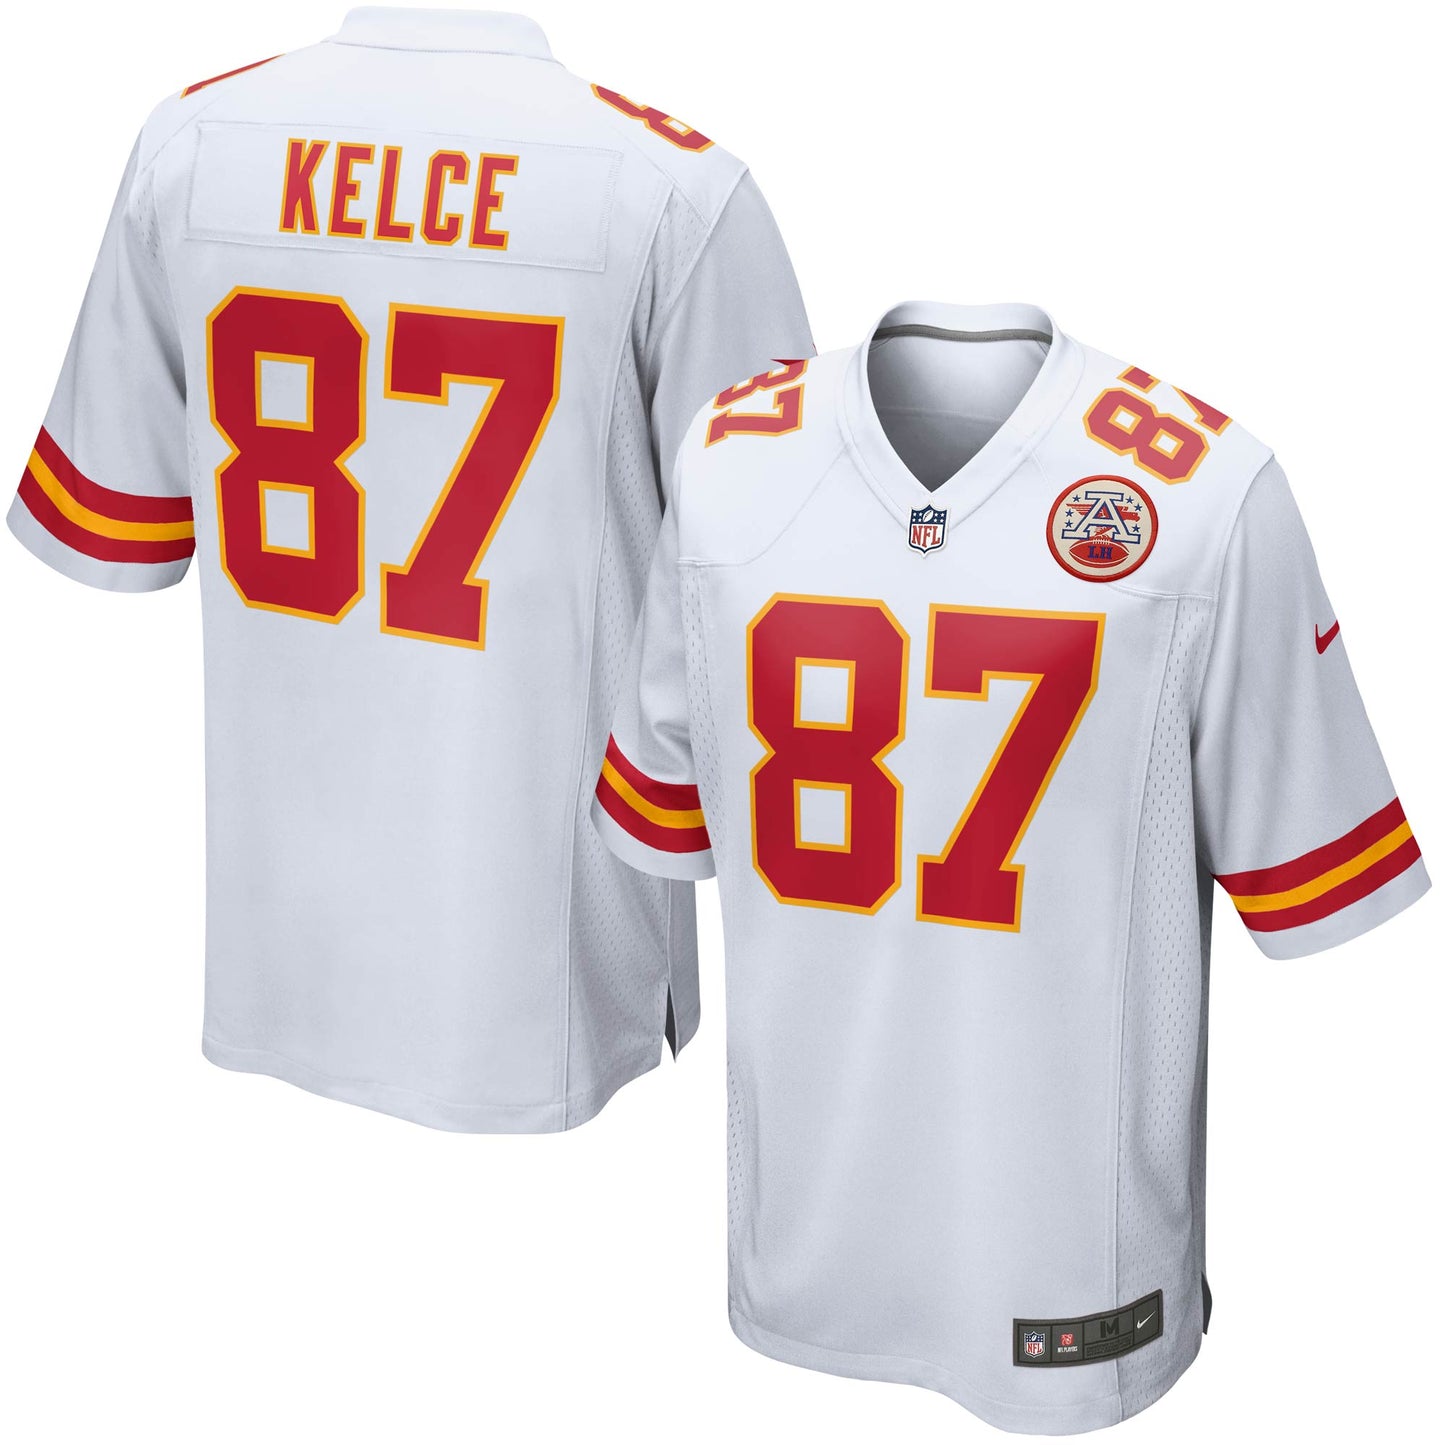 Travis Kelce Kansas City Chiefs Nike Youth Game Jersey - White